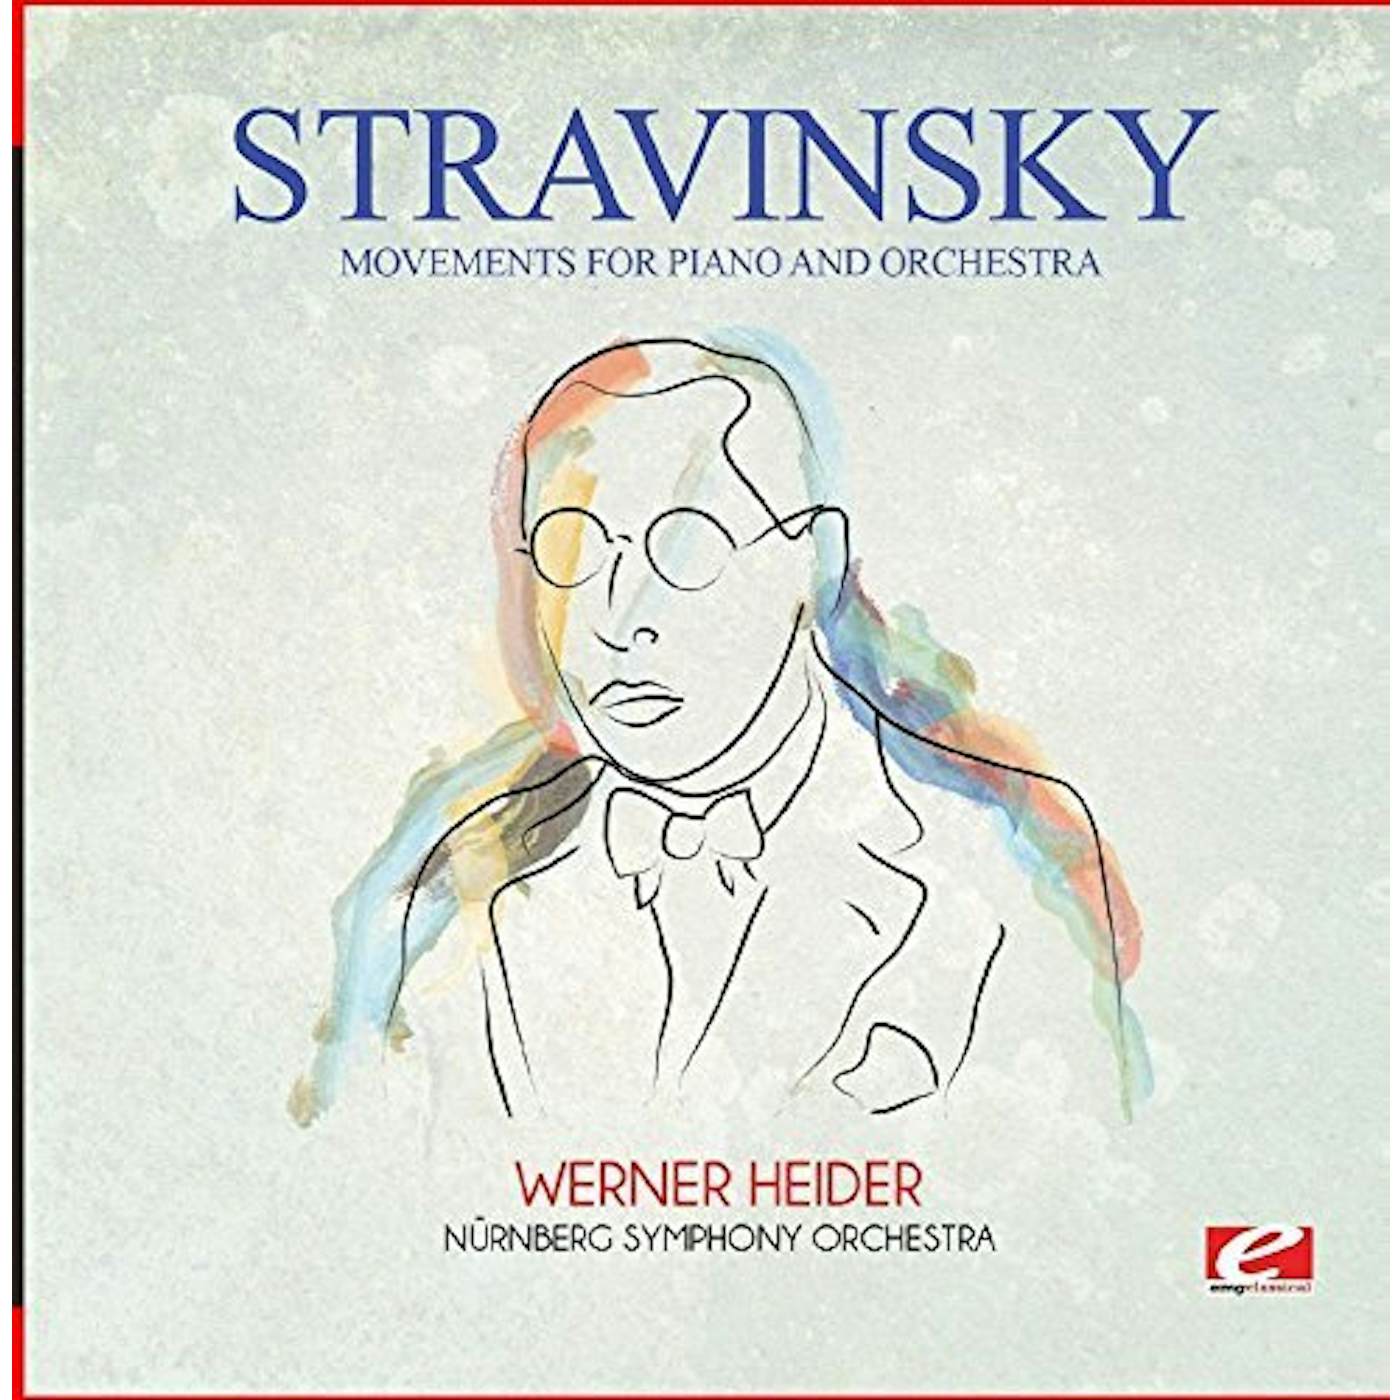 Igor Stravinsky MOVEMENTS FOR PIANO & ORCHESTRA CD